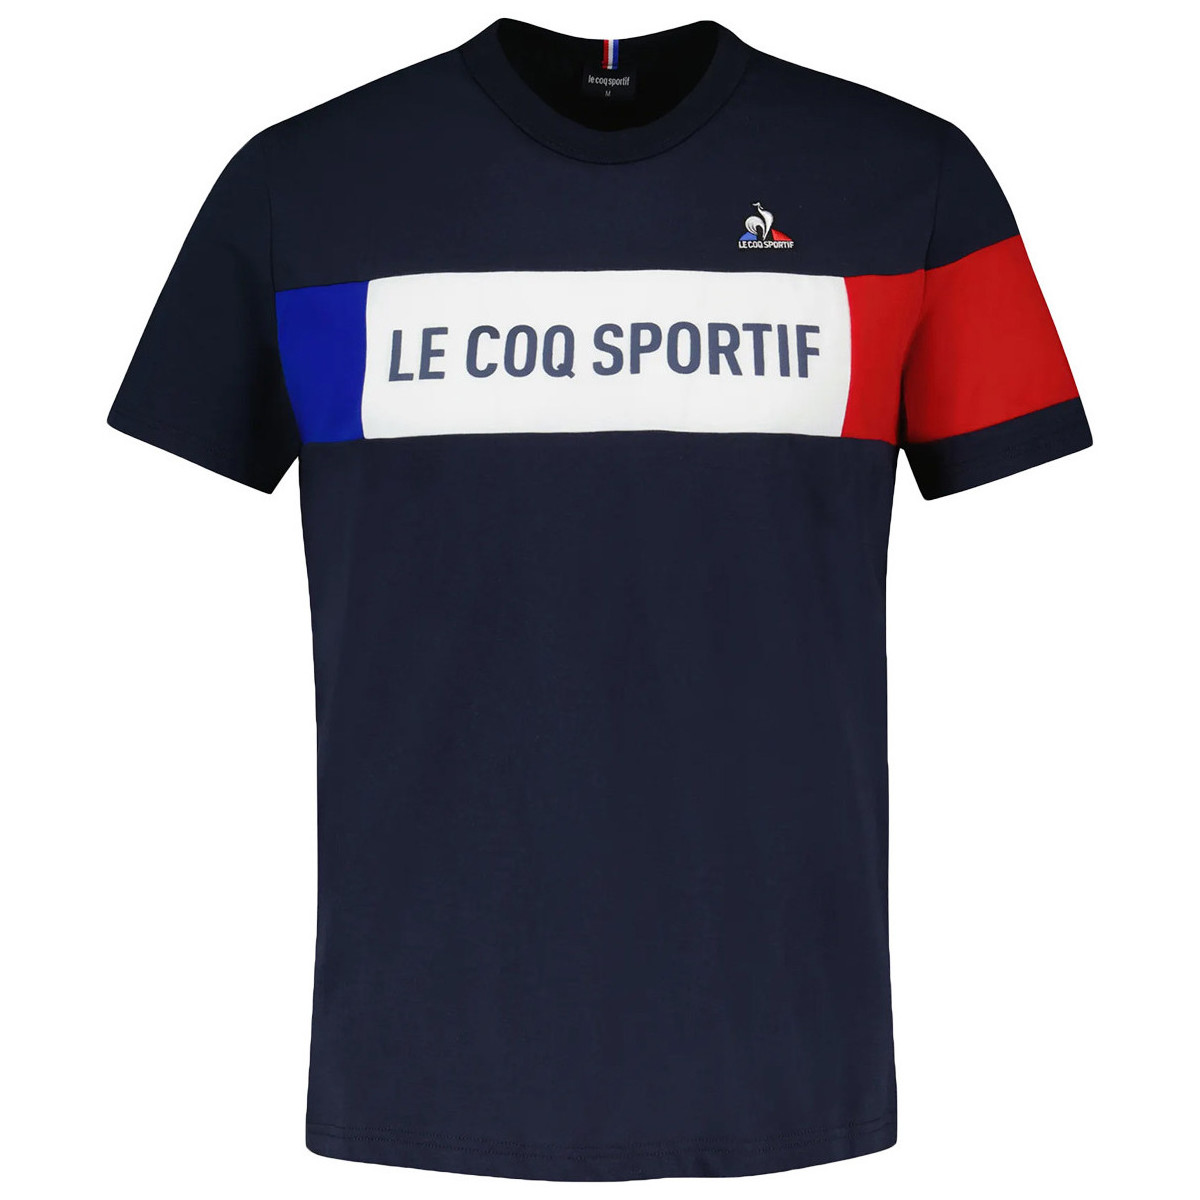 Textil Trička s krátkým rukávem Le Coq Sportif Tricolore Tee Modrá